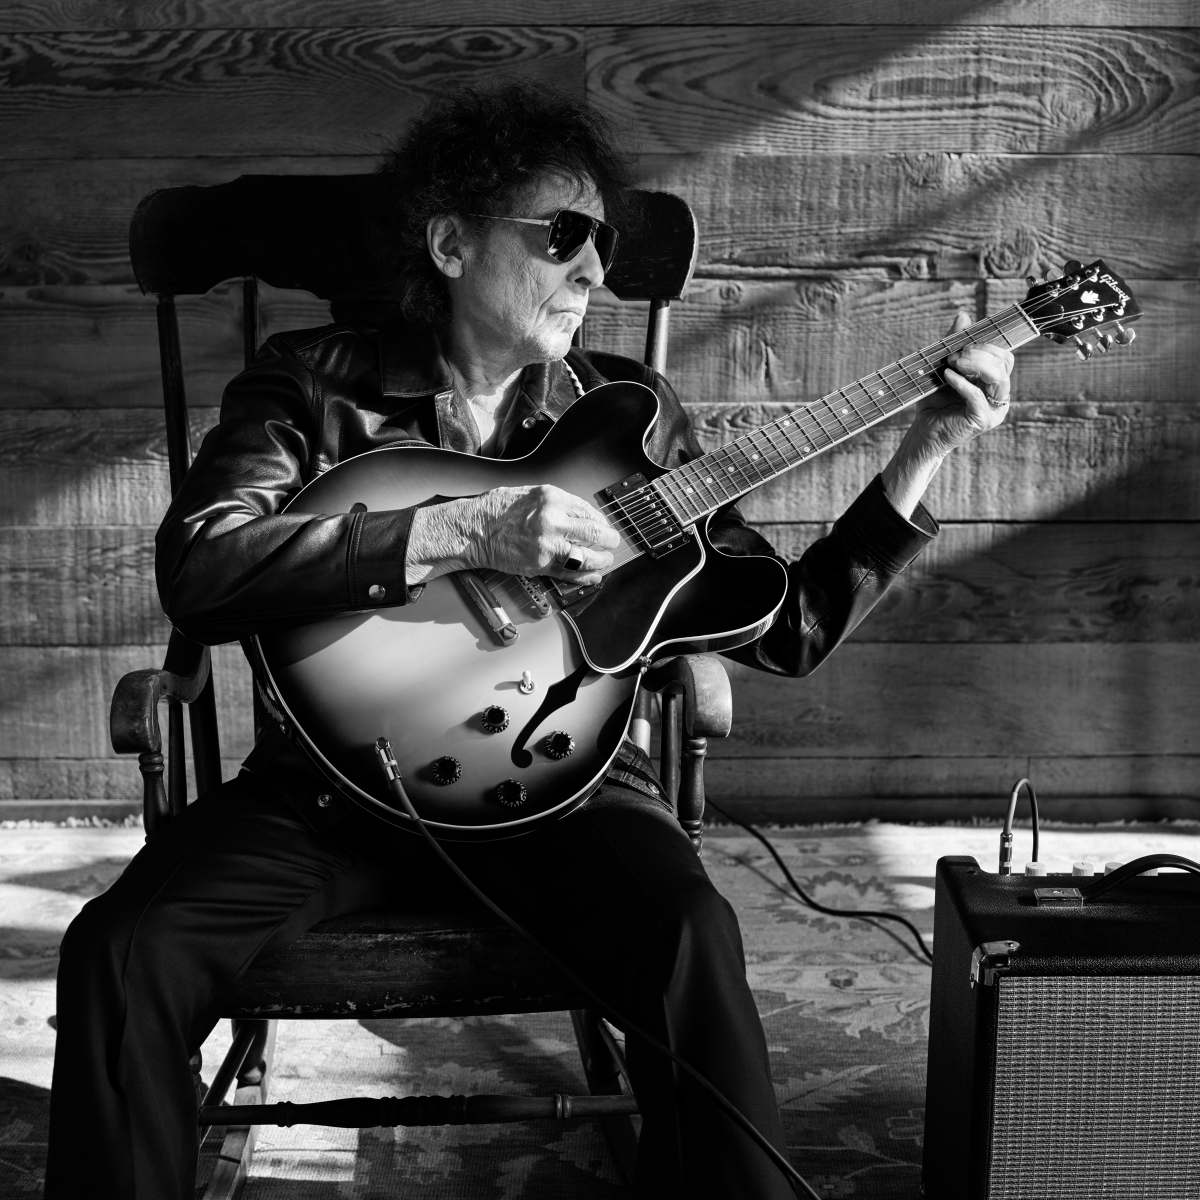 Celine Homme: Portrait Of A Musician - Bob Dylan